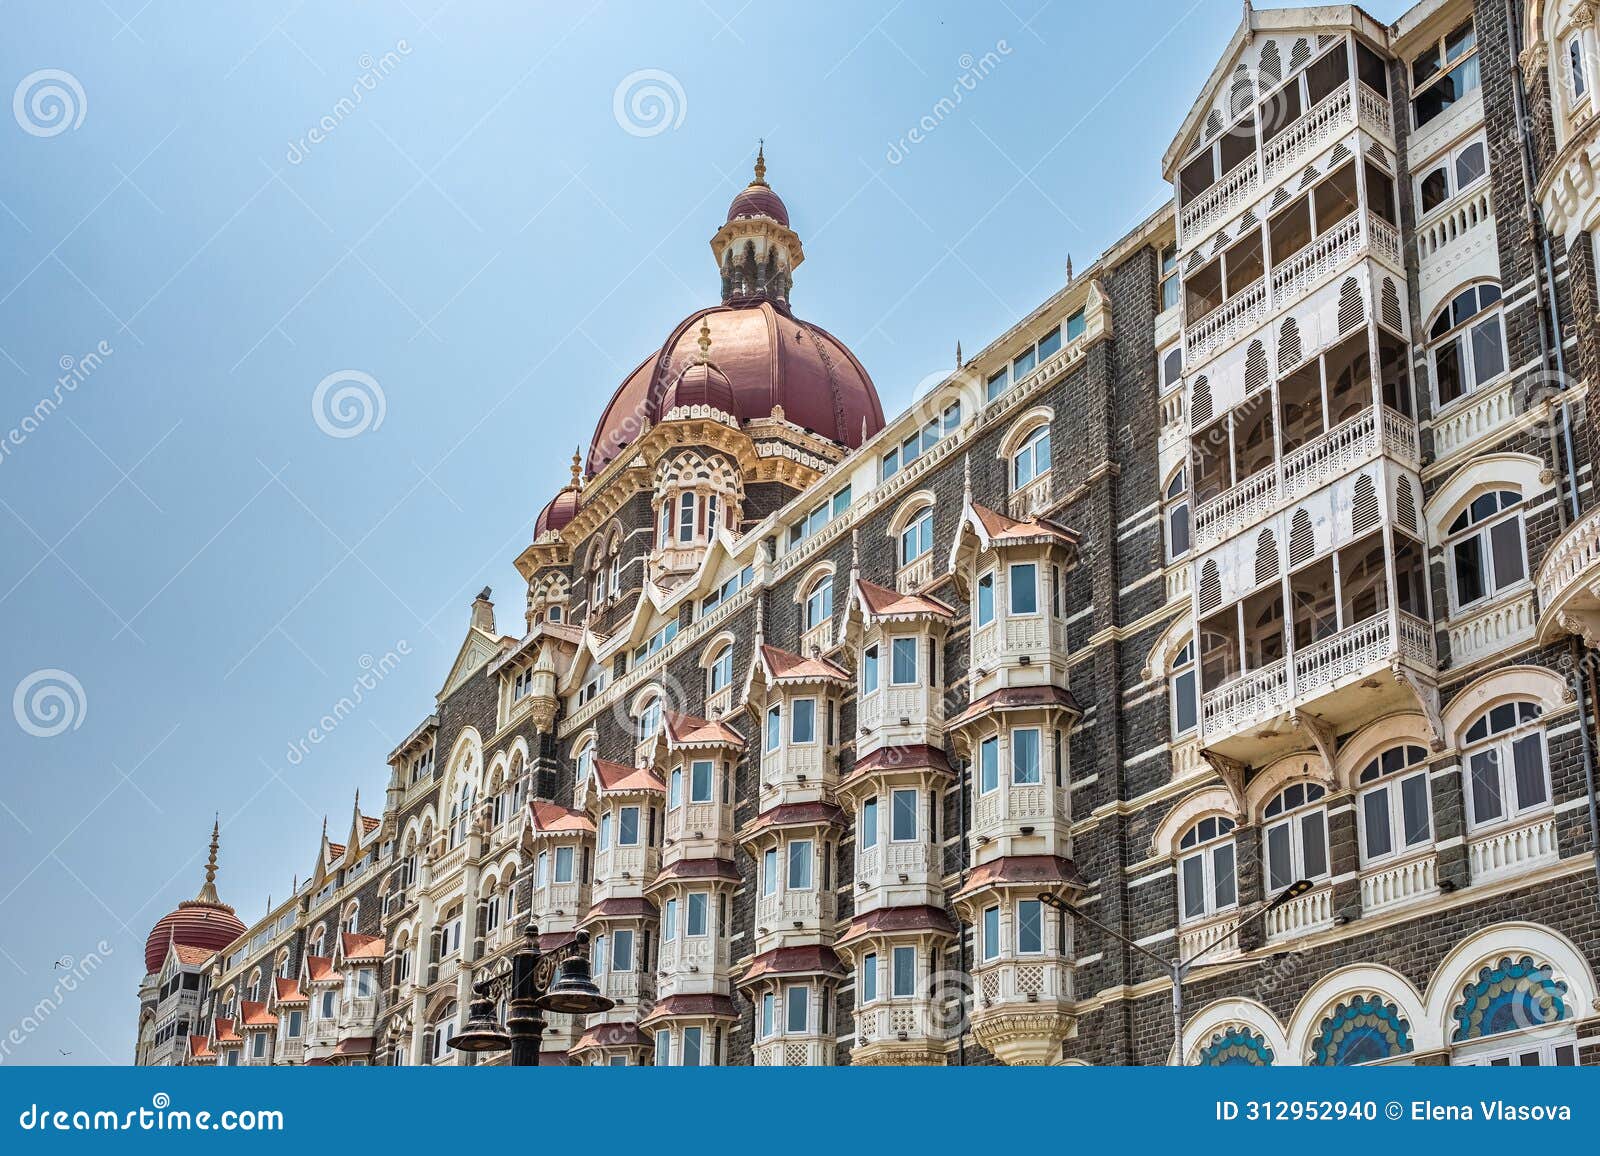 facade of the taj mahal palace hotel in colaba district. taj mahal hotel famous building of touristic part in mumbai